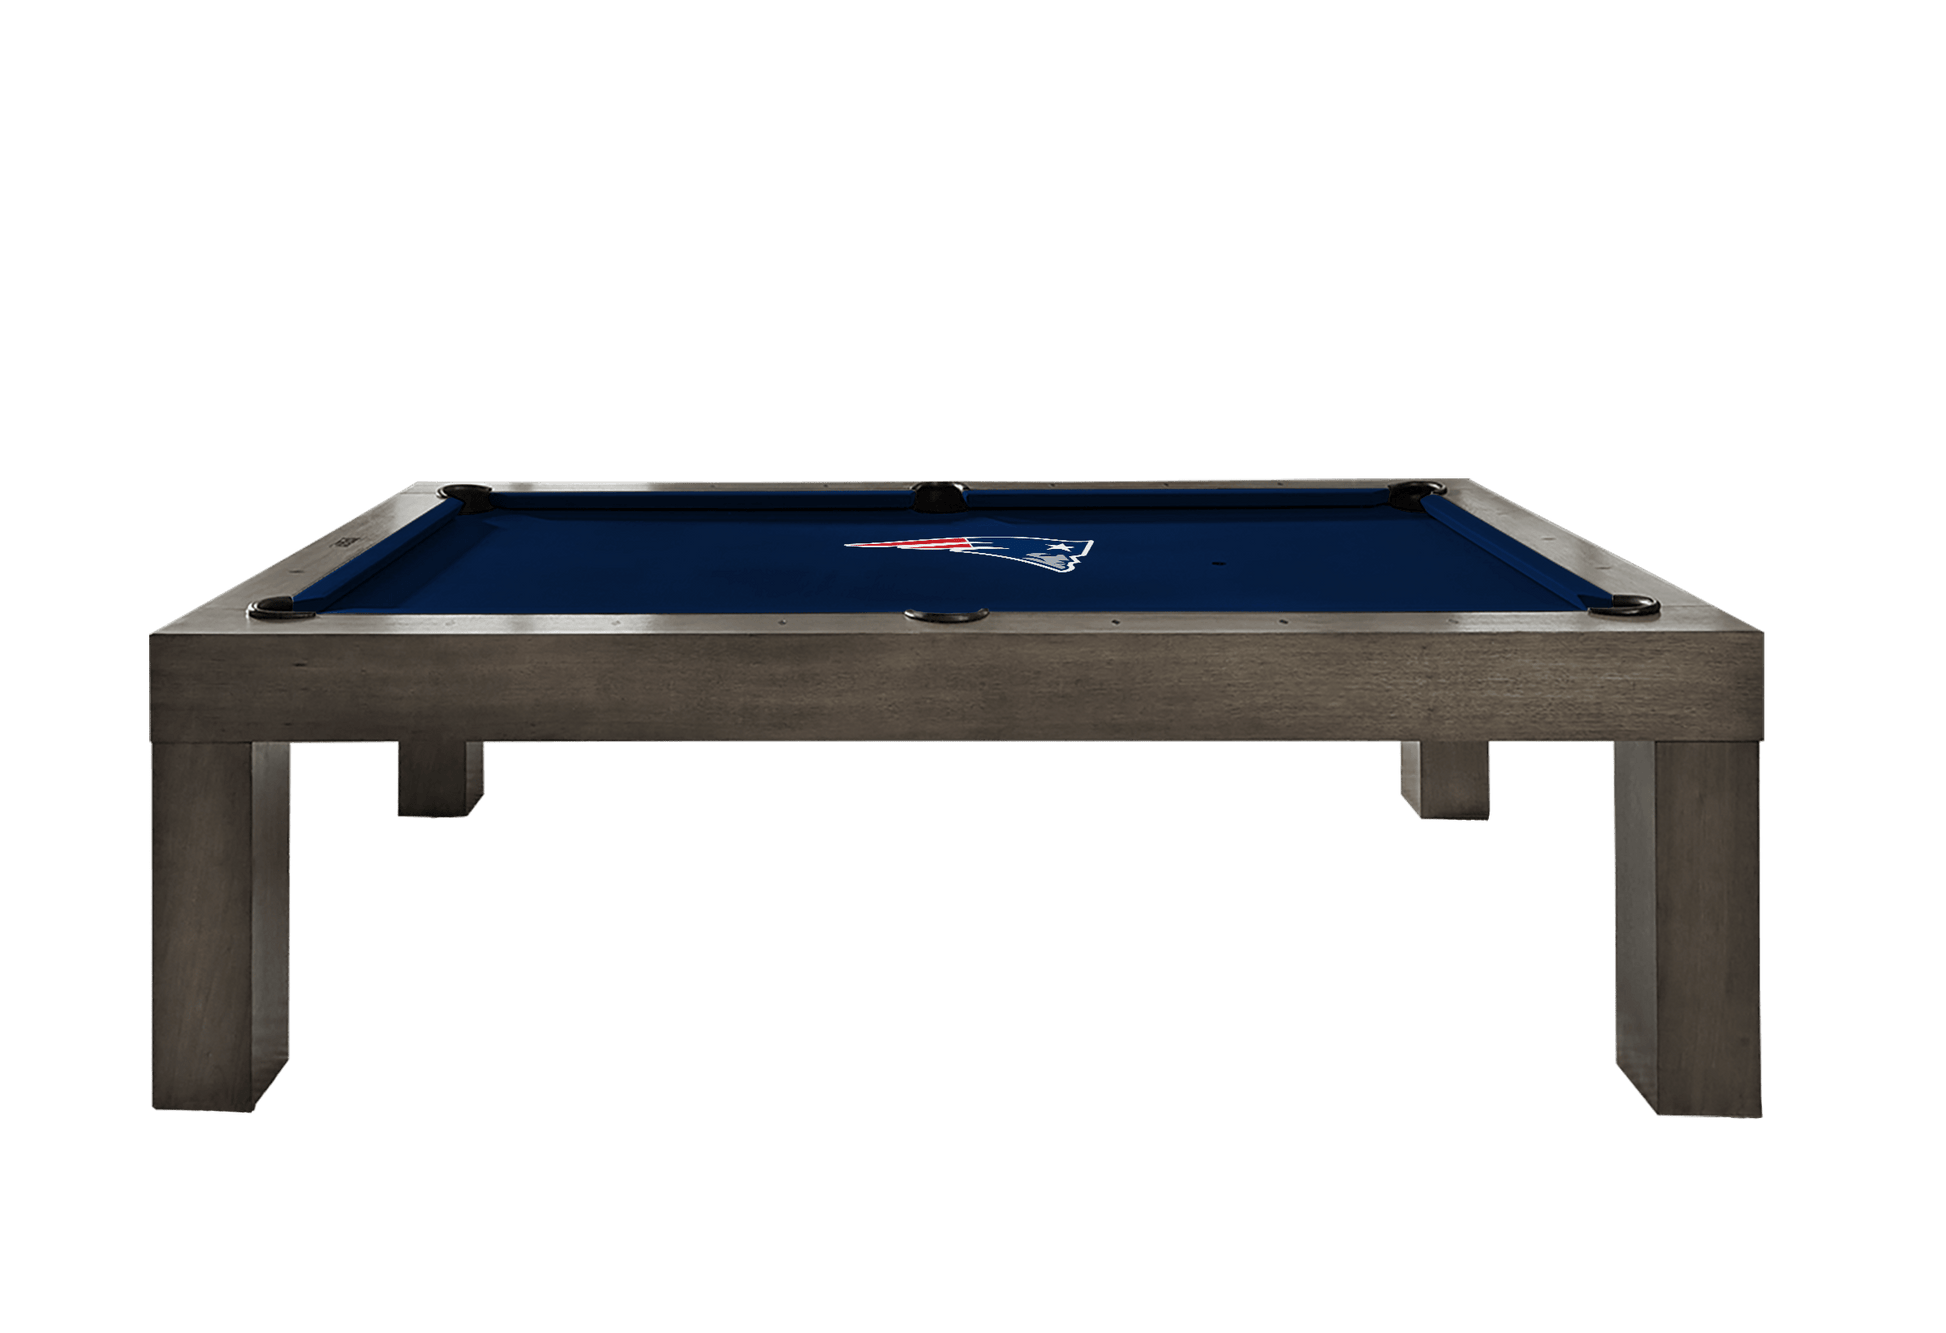 New England Patriots Premium Pool Table Bundle - Charcoal Pool Bundle Home Arcade Games   